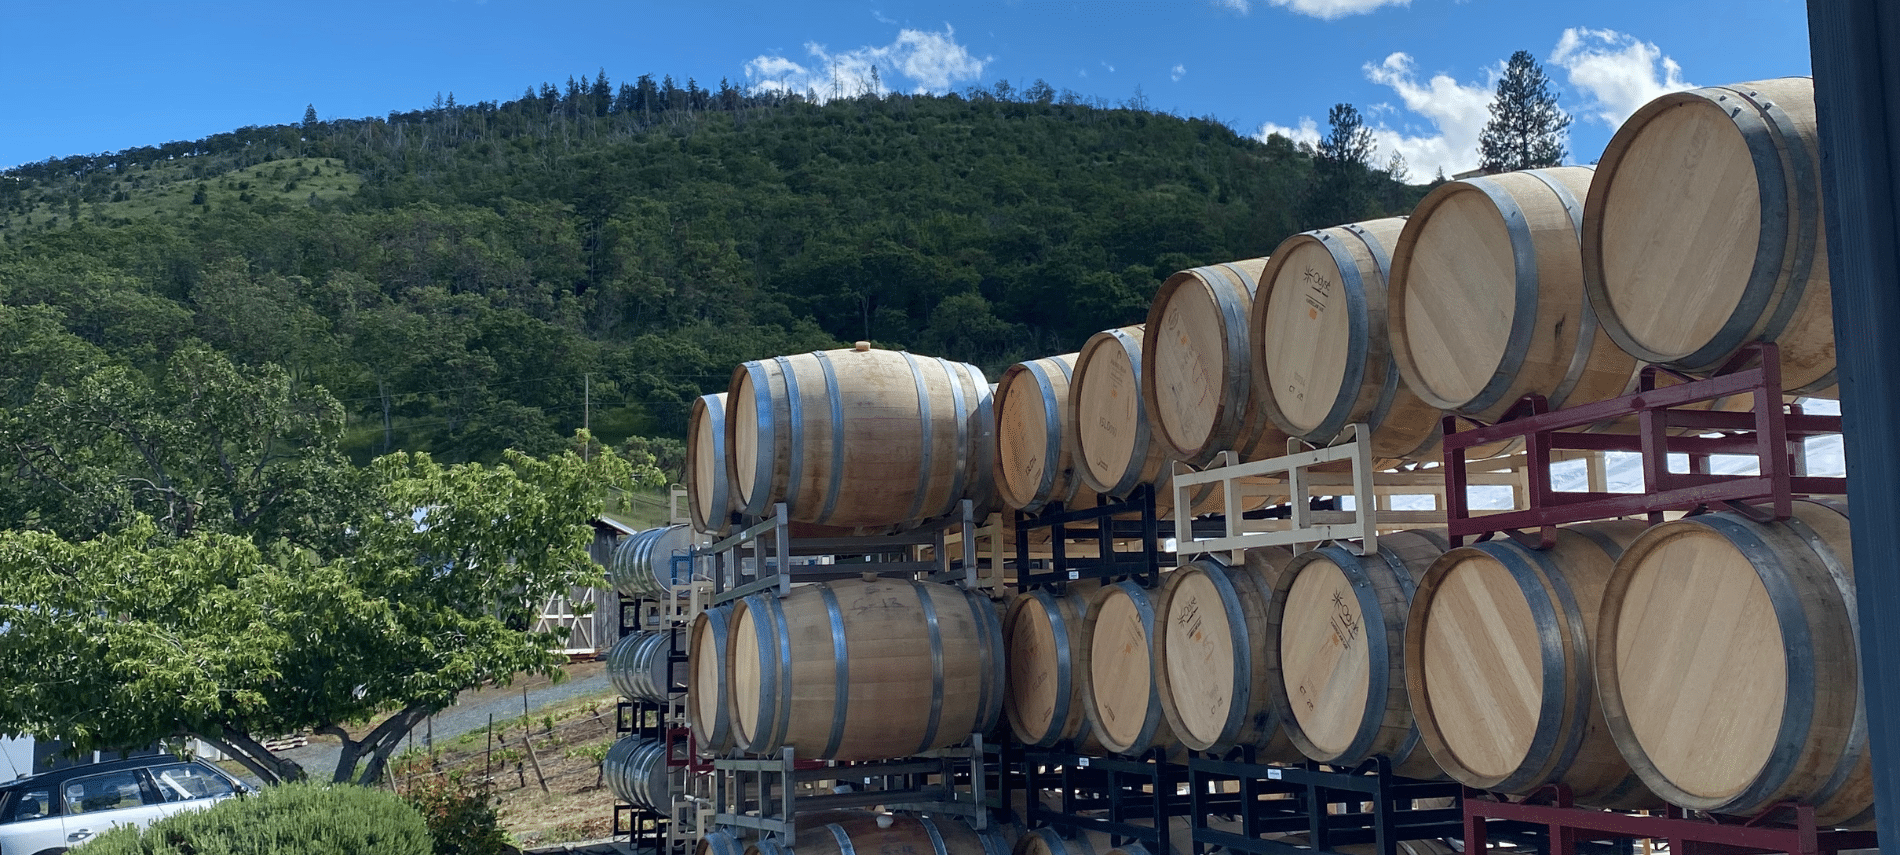 Visit our Rogue Valley Wine Region here in Ashland Oregon ( wine Barrels)